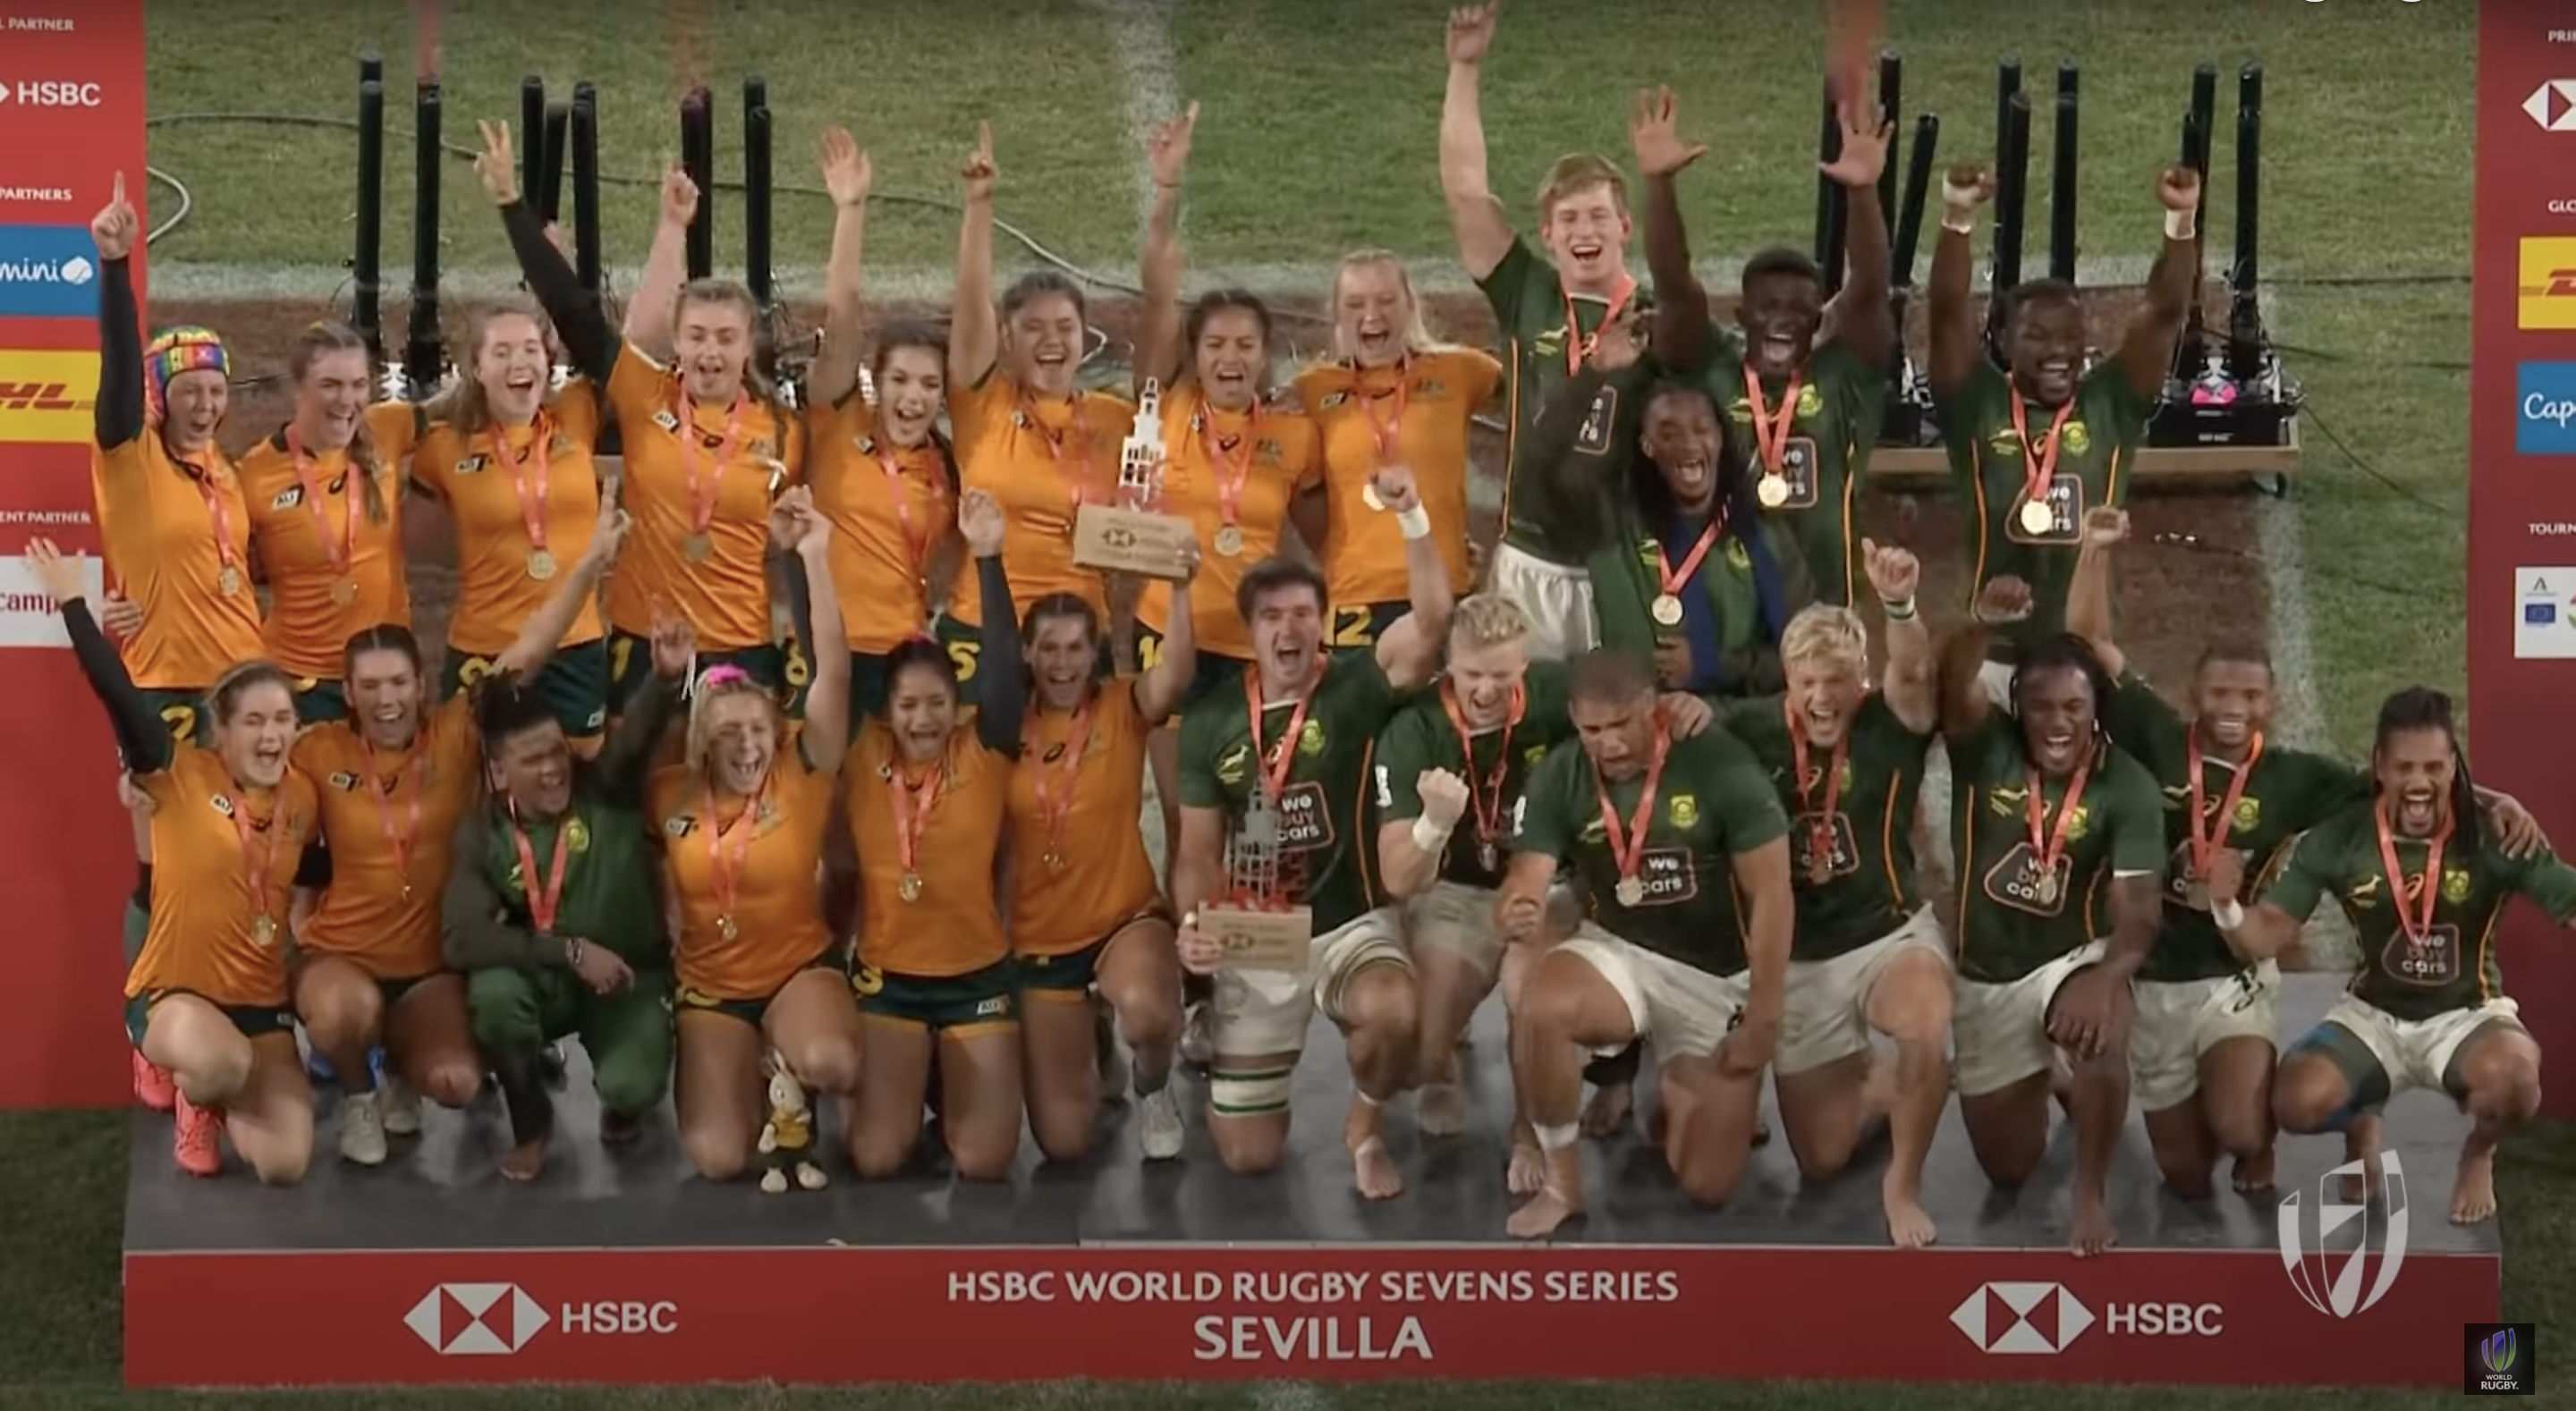 Australia Women show true rugby values after winning Seville Sevens